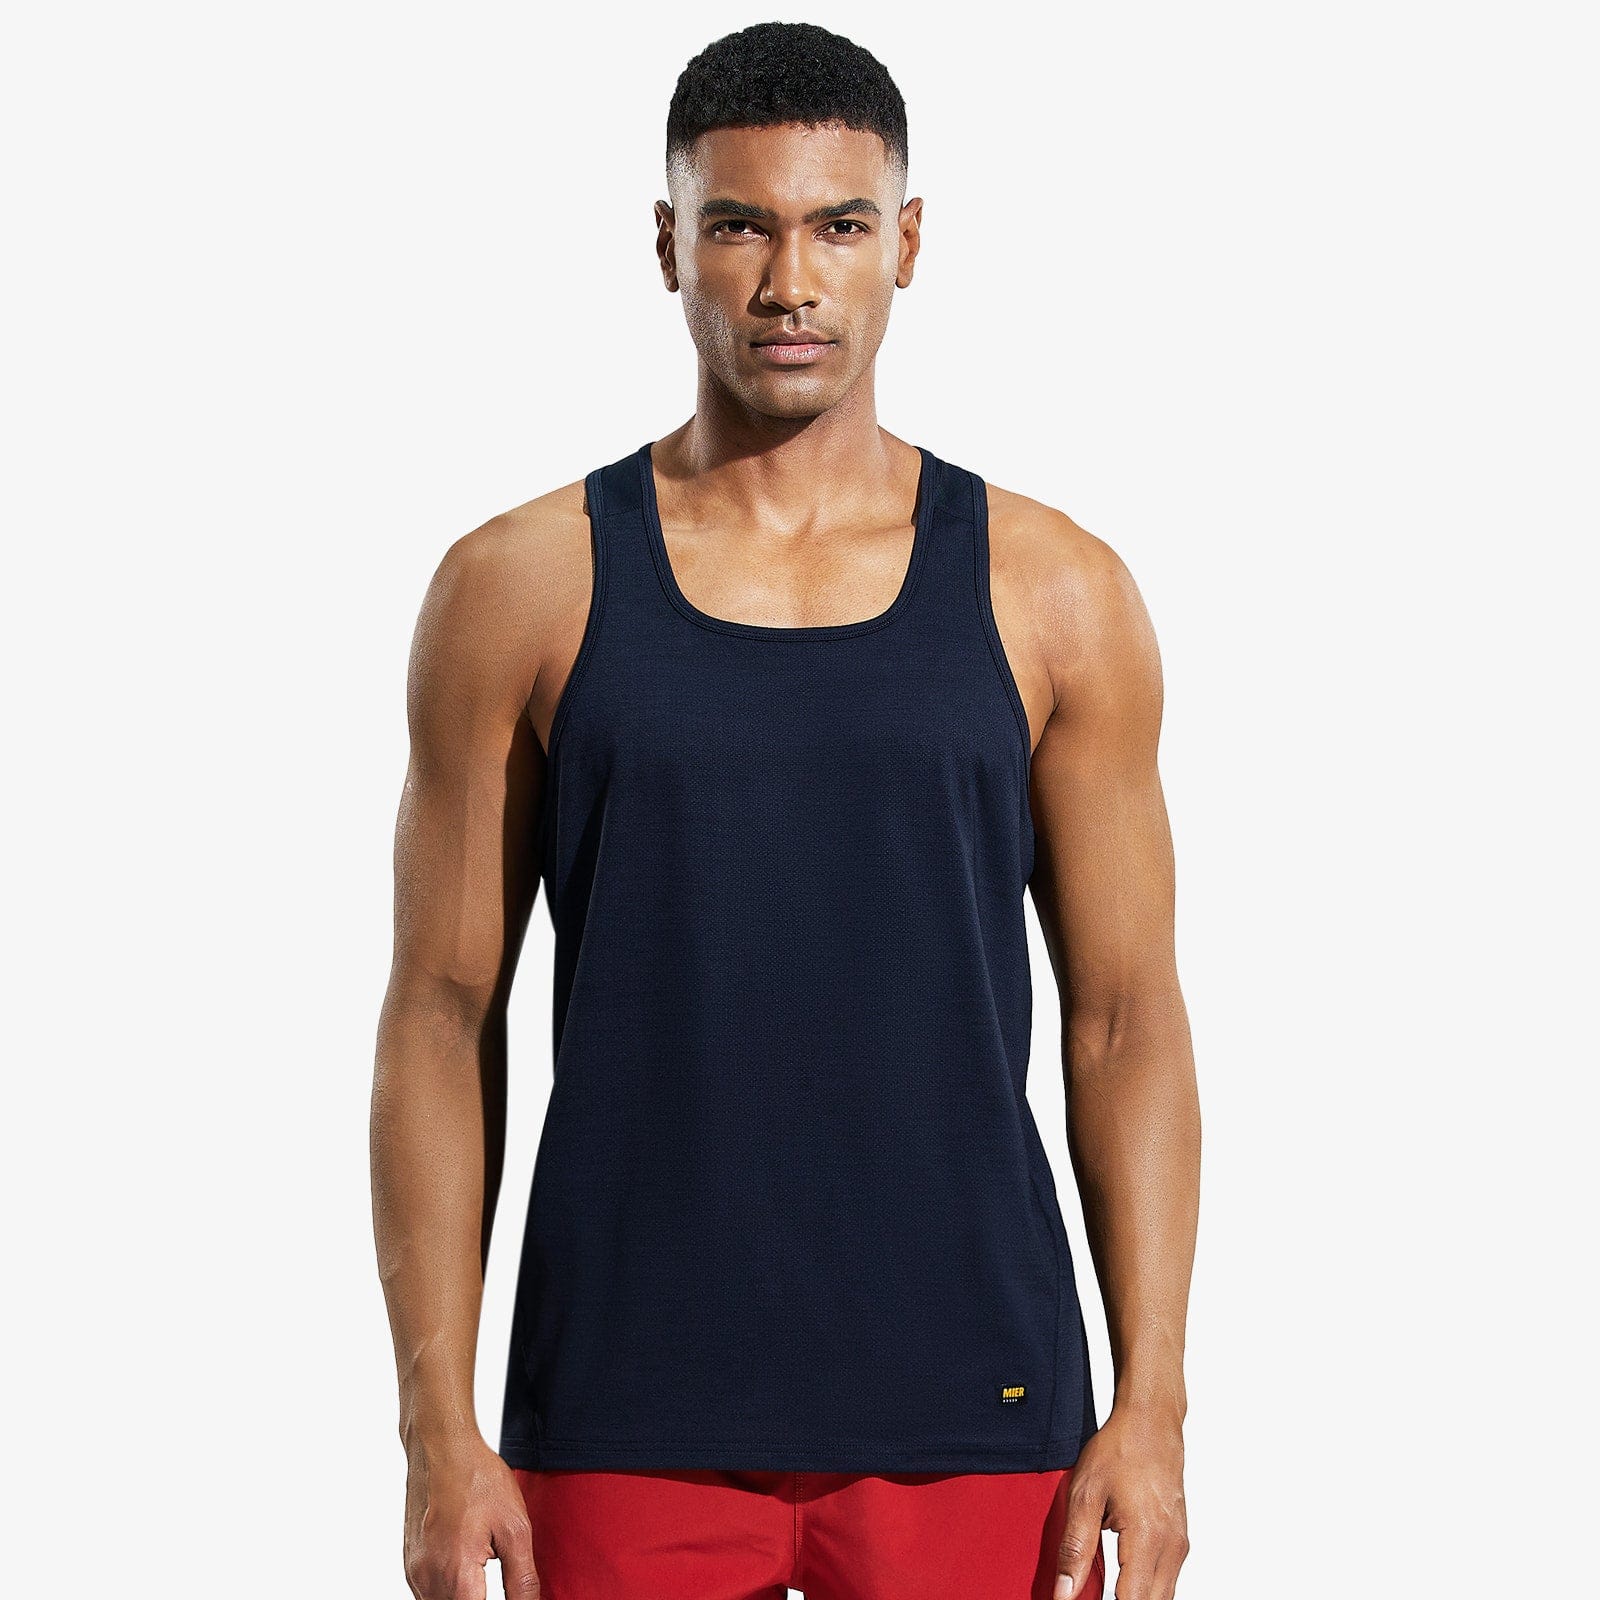 Men's Sleeveless Workout Shirts Quick Dry Athletic Tanks - Heather Dark  Blue / S